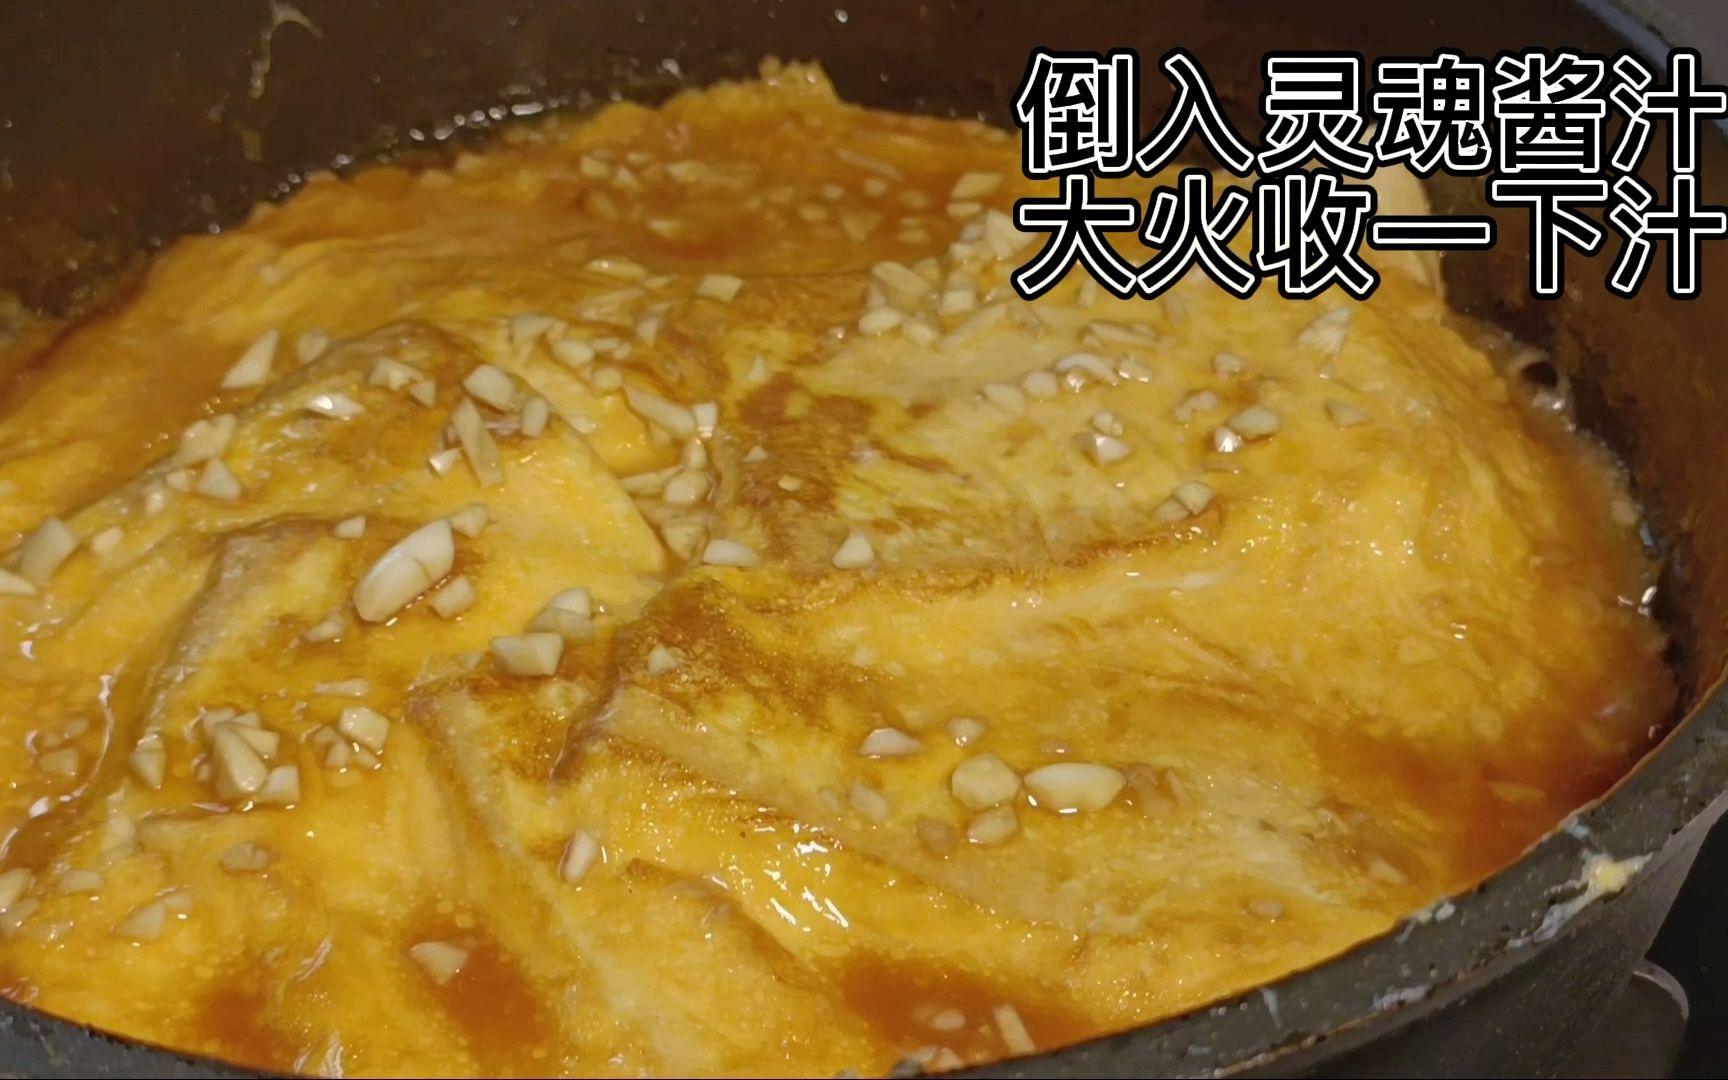 豆腐爱好者决不能错过的做法【蛋包豆腐】_哔哩哔哩 (゜-゜)つロ 干杯~-bilibili